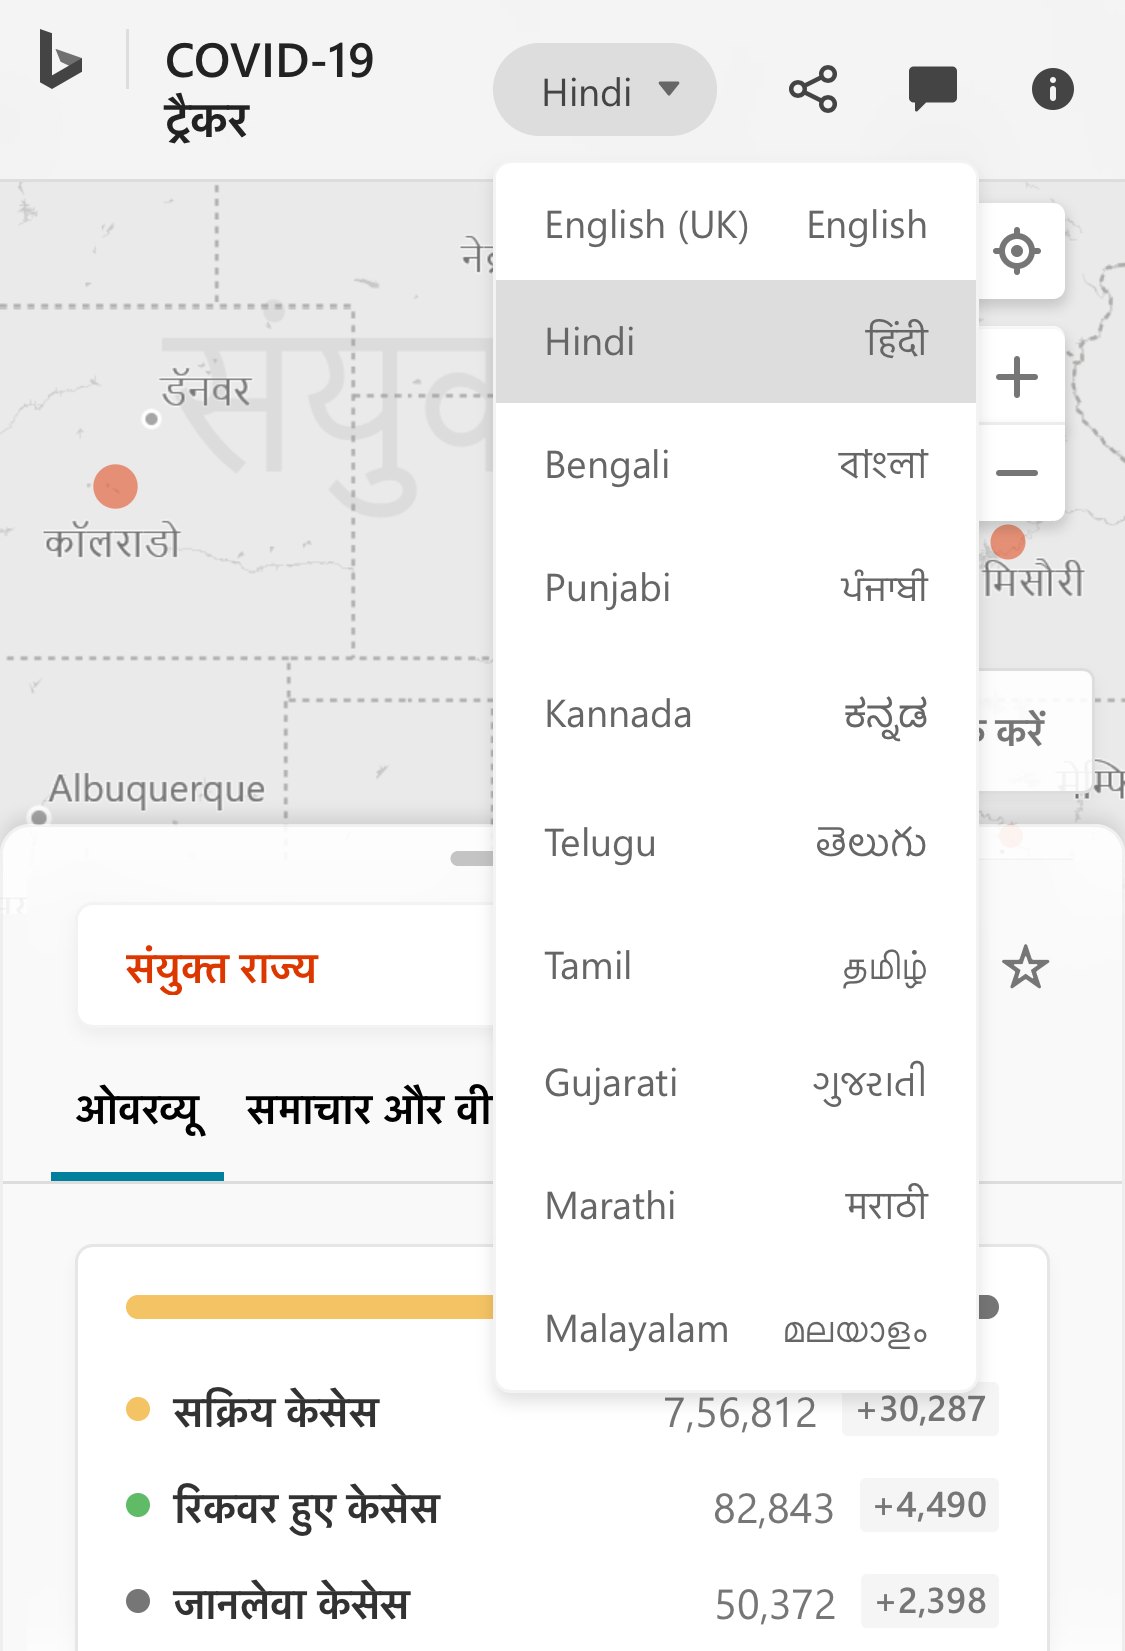 Bing’s COVID-19 Tracker supports Hindi, Bengali, Punjabi, Tamil, Telugu, Gujarati, Marathi, Malayalam, and Kannada.